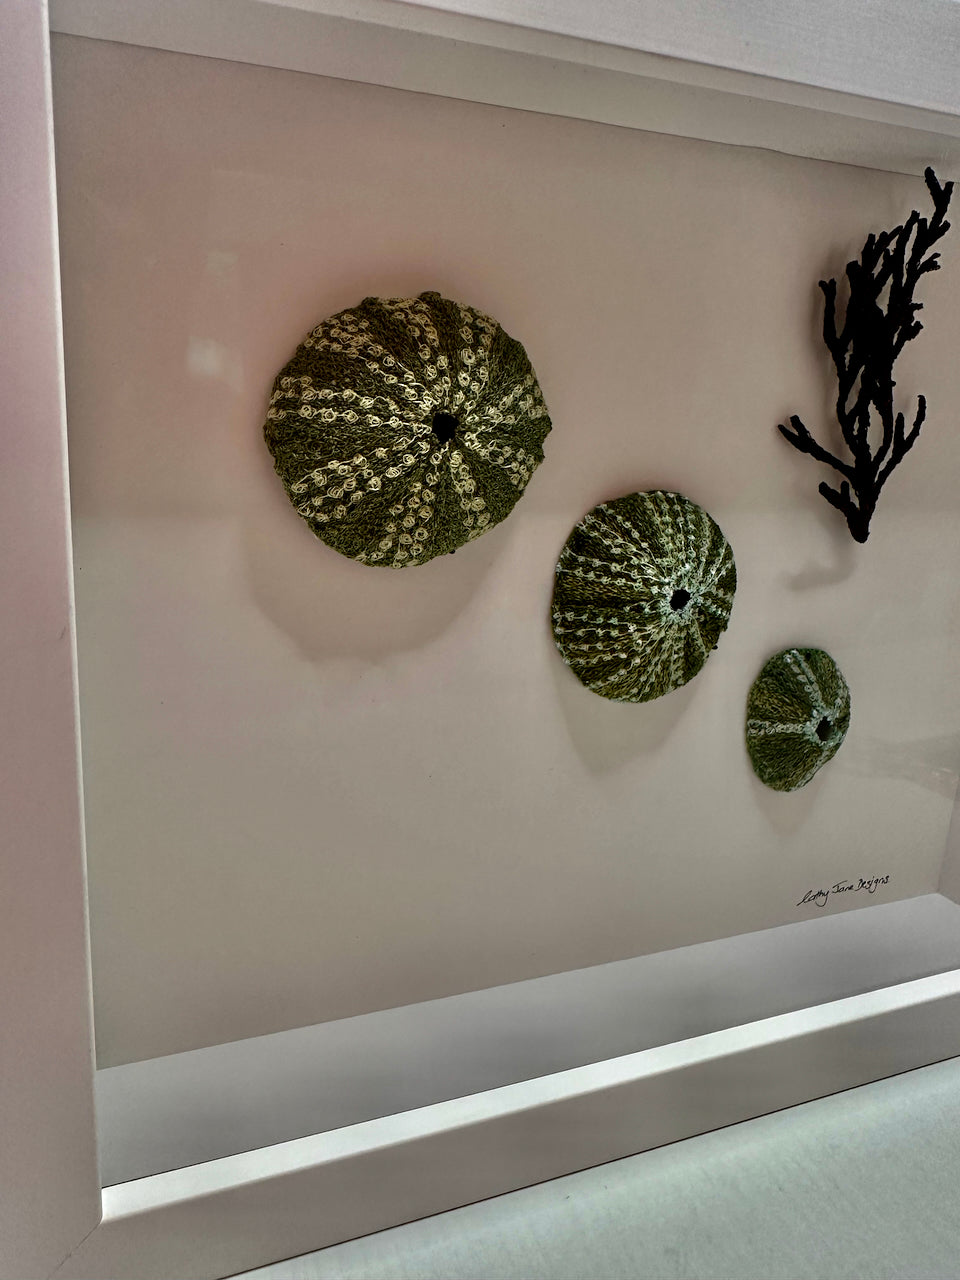 Kina Shells sculptural embroidery #4.